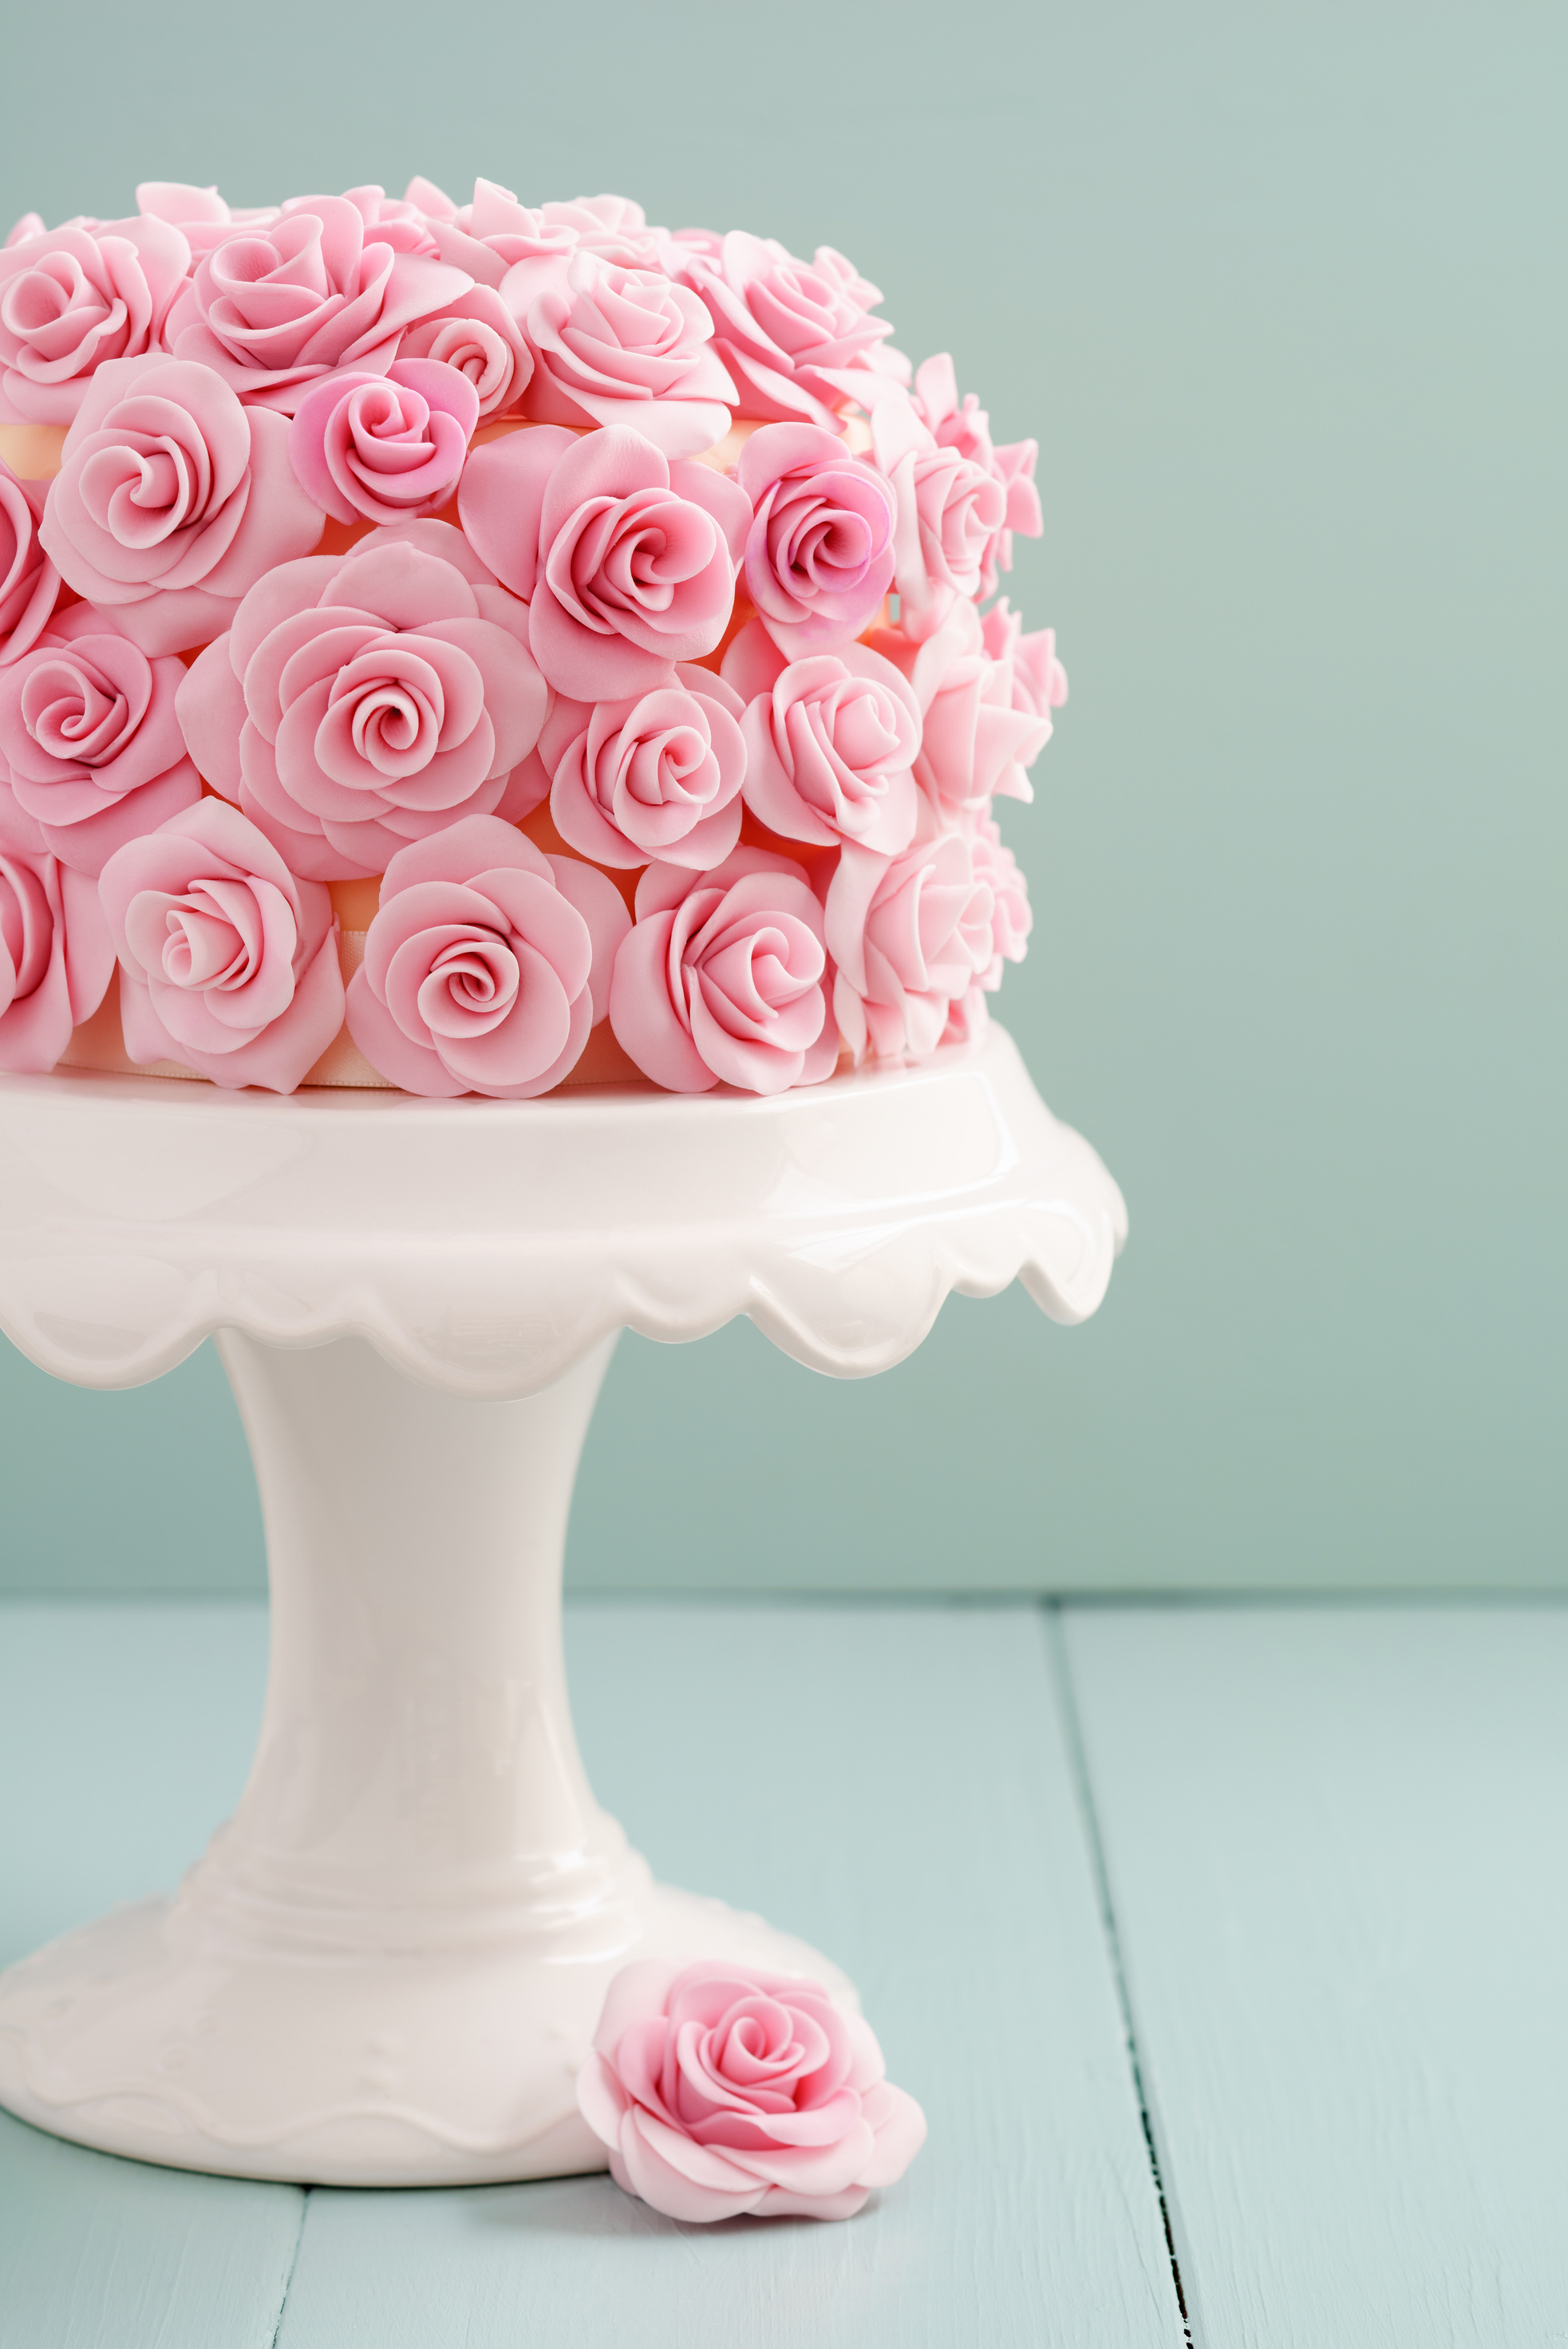 Cake with Sugar Roses